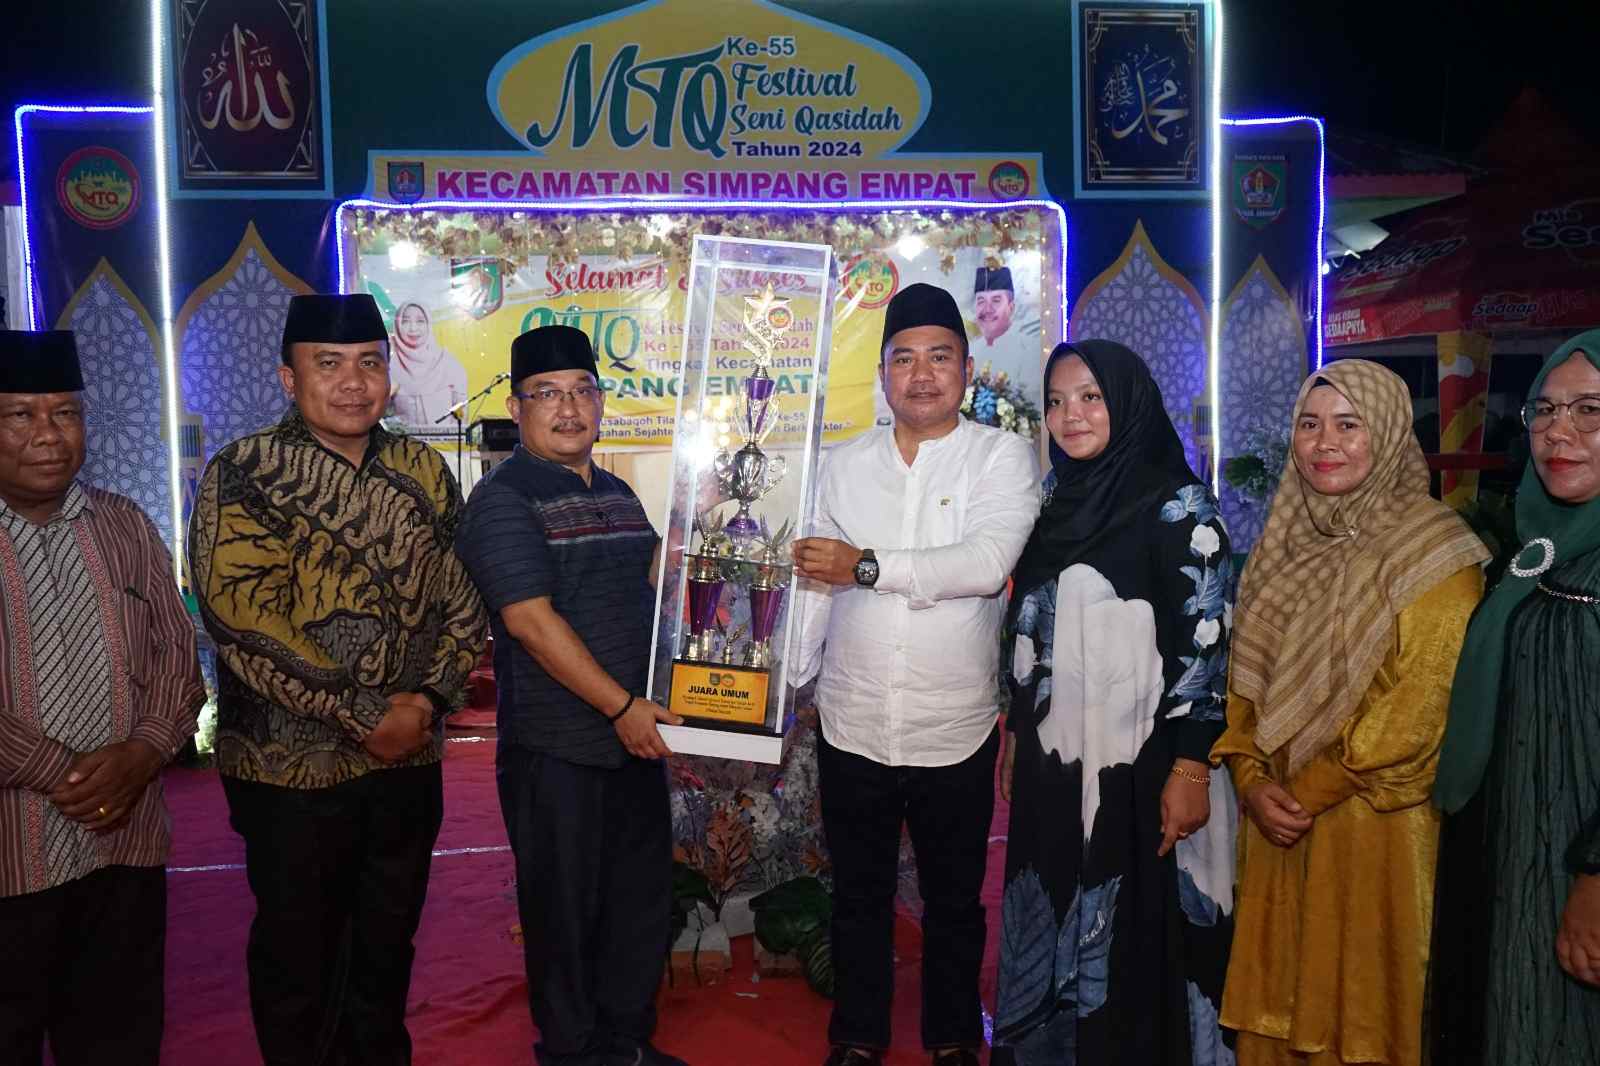 MTQ Dan Festival Seni Qasidah Ke 55 Kecamatan Simpang Empat Resmi Ditutup